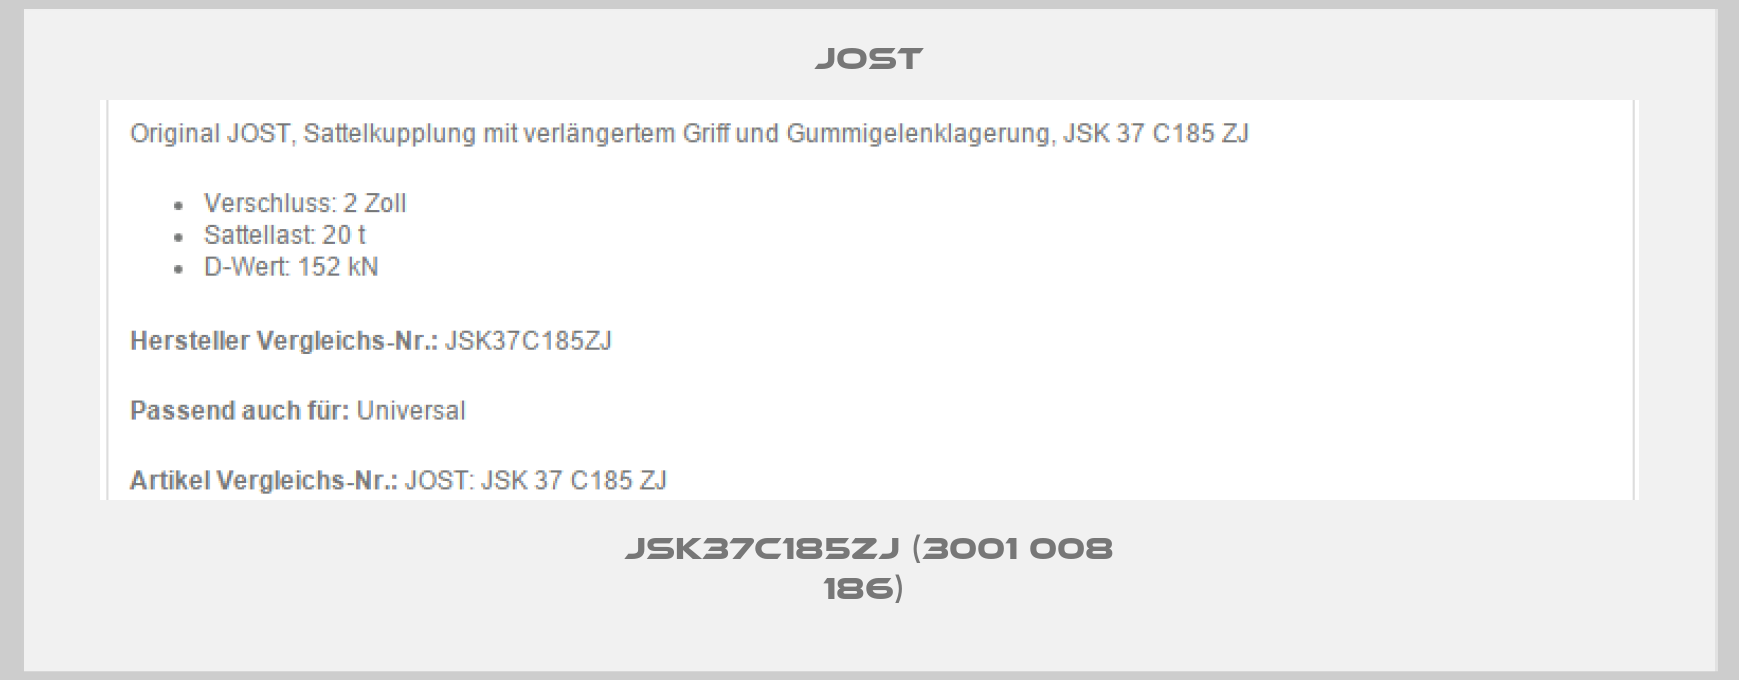 JSK37C185ZJ (3001 008 186) -big